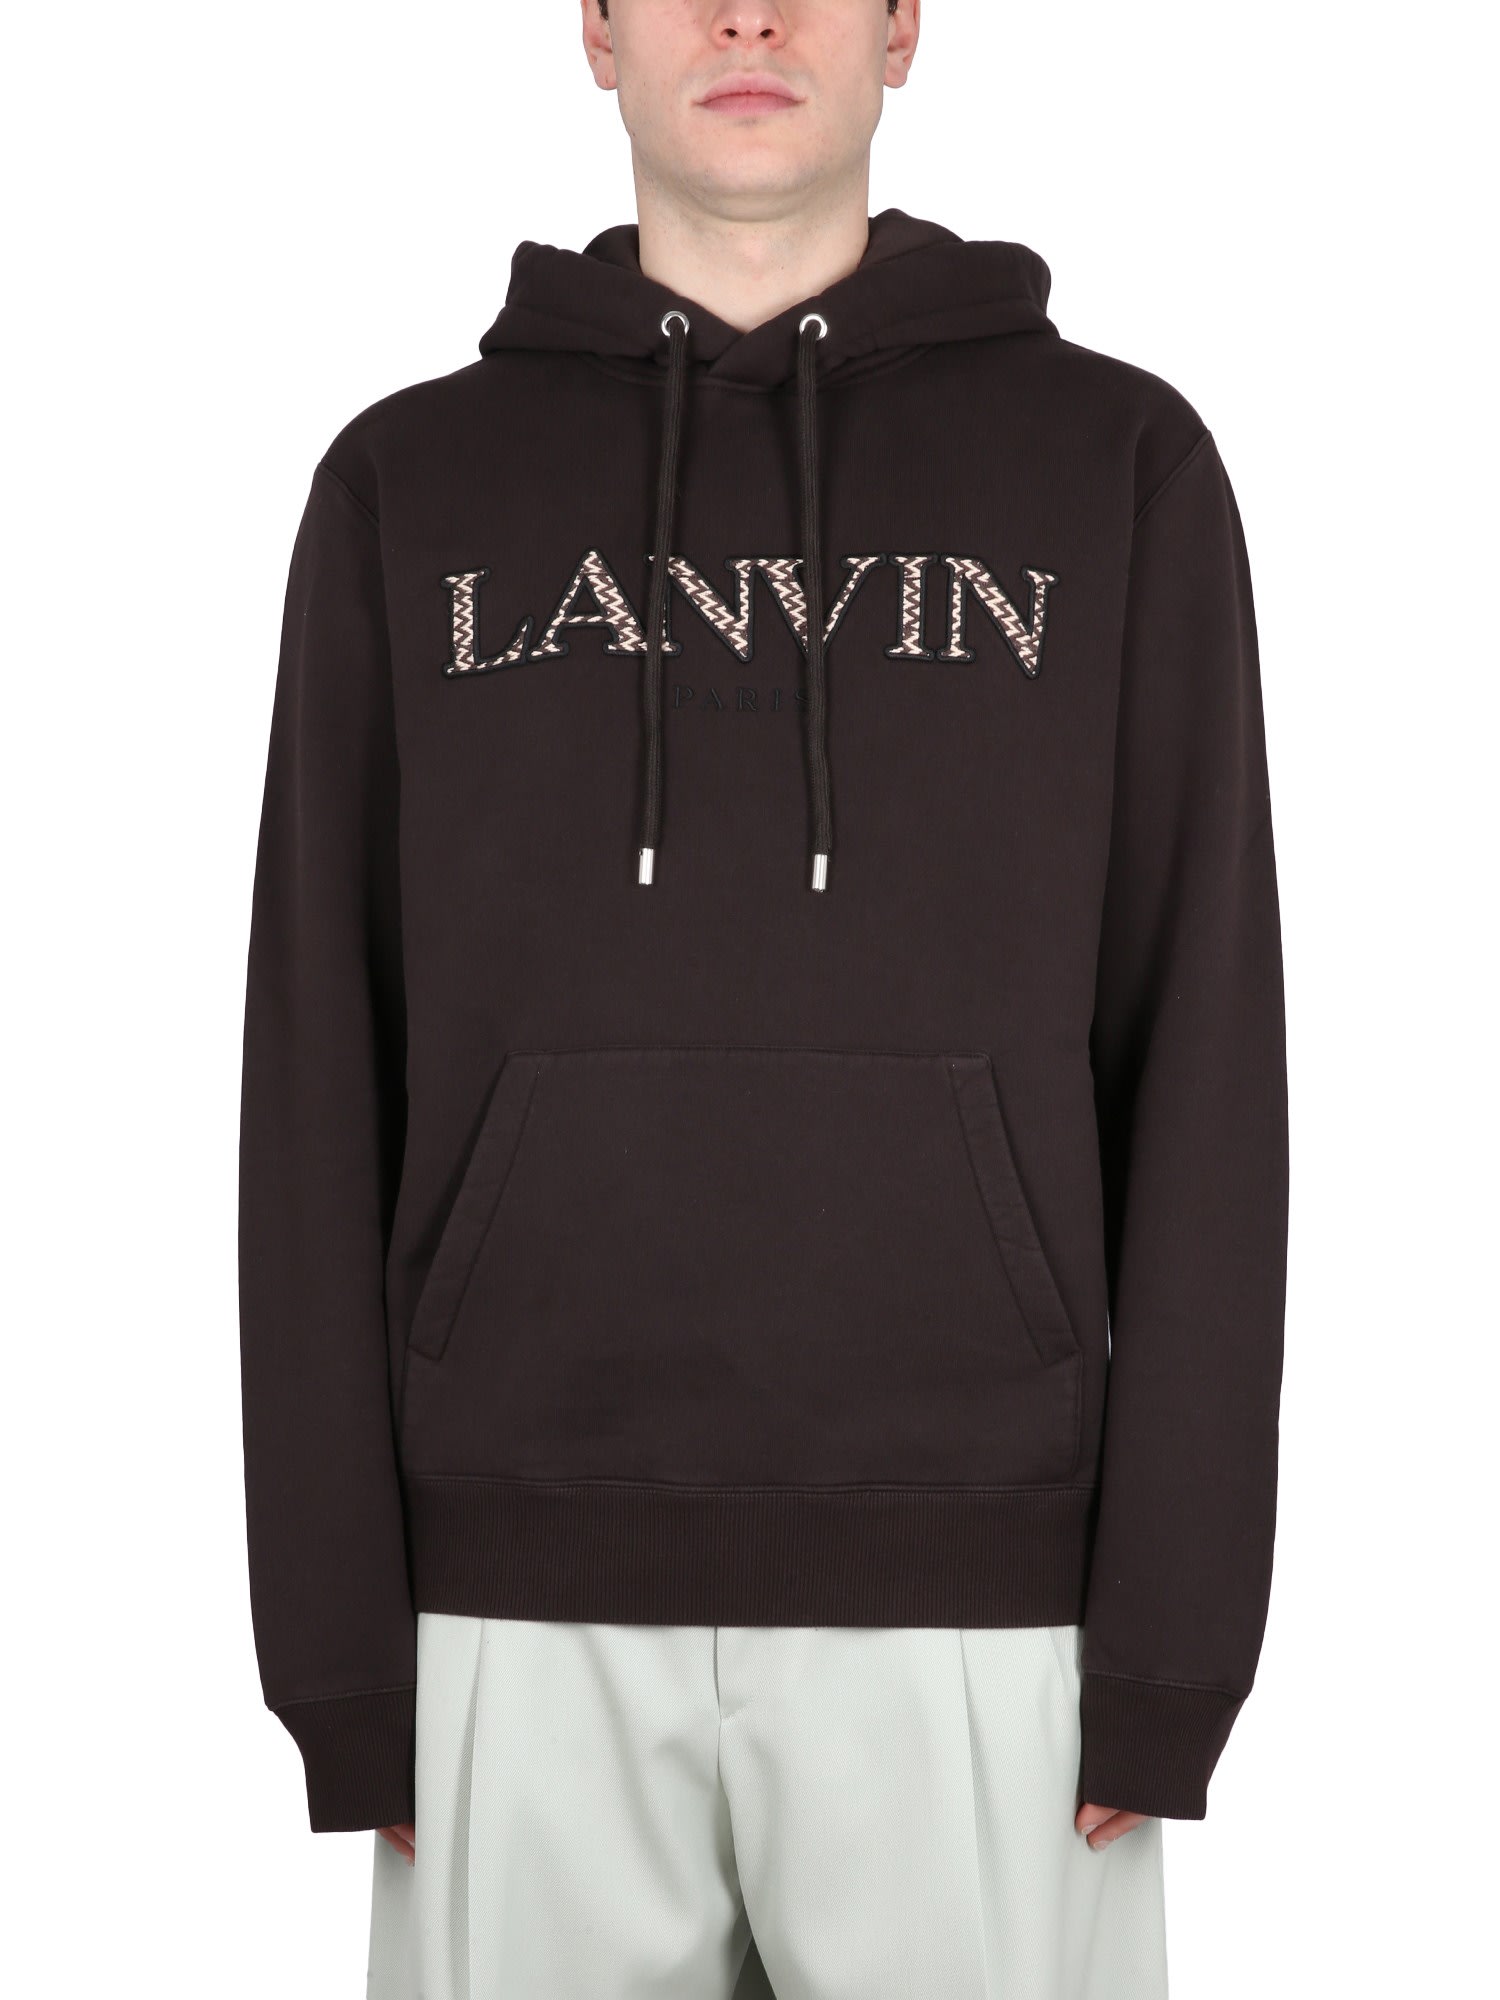 Lanvin Sweatshirt With Logo